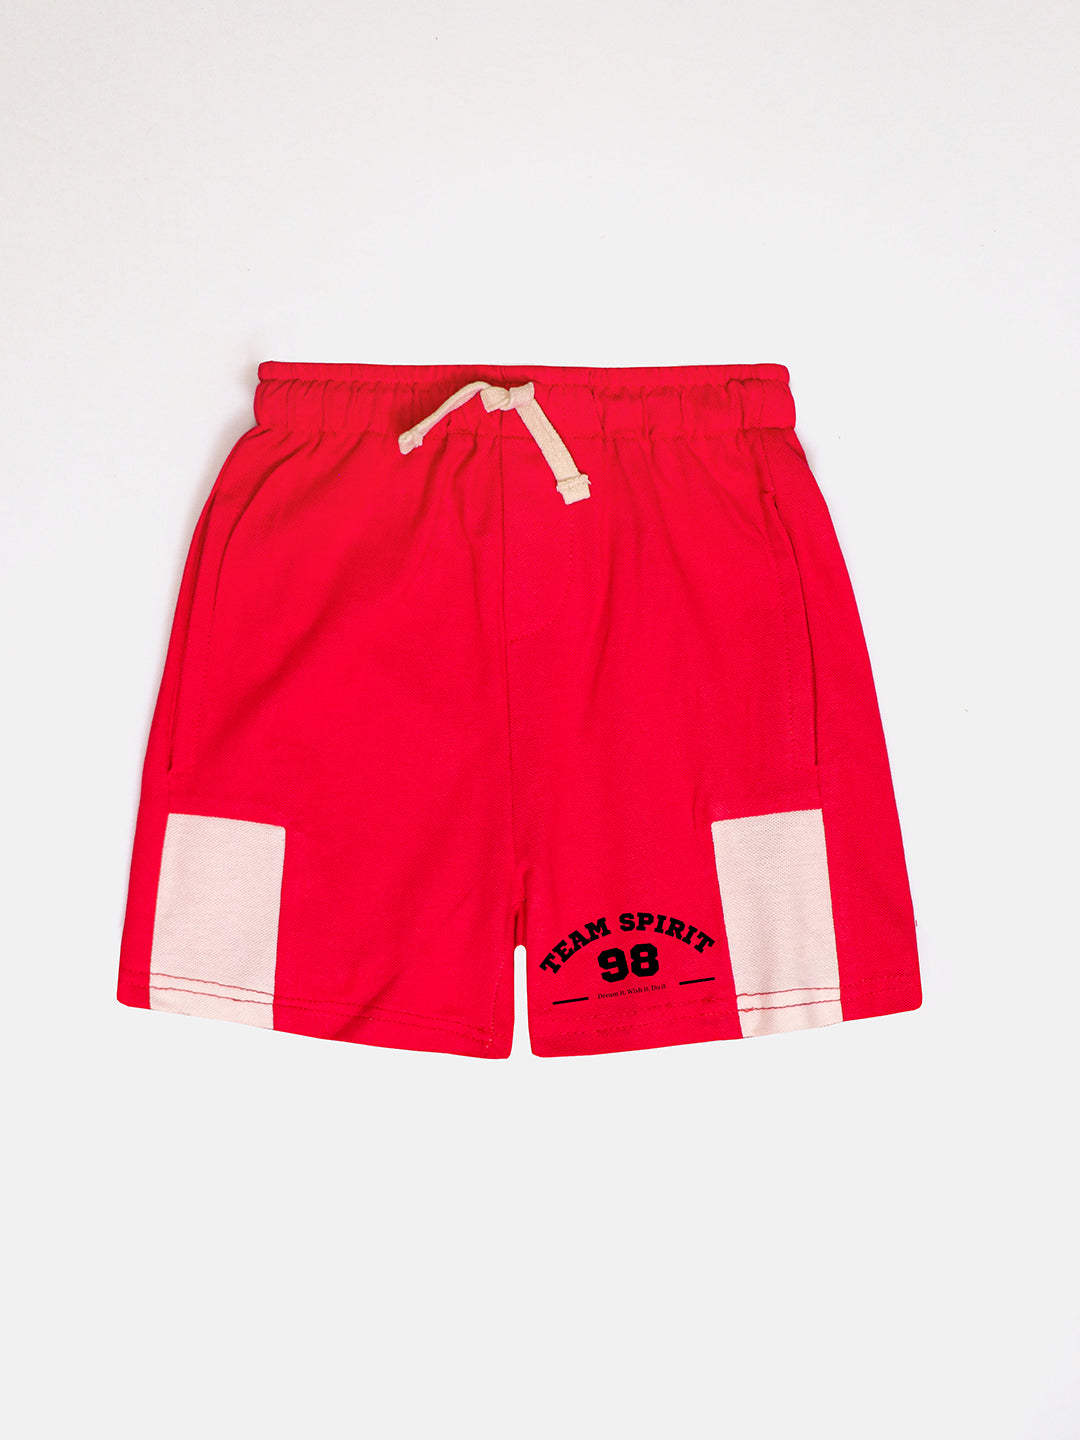 Boys Red Team Spirit Cotton Shorts